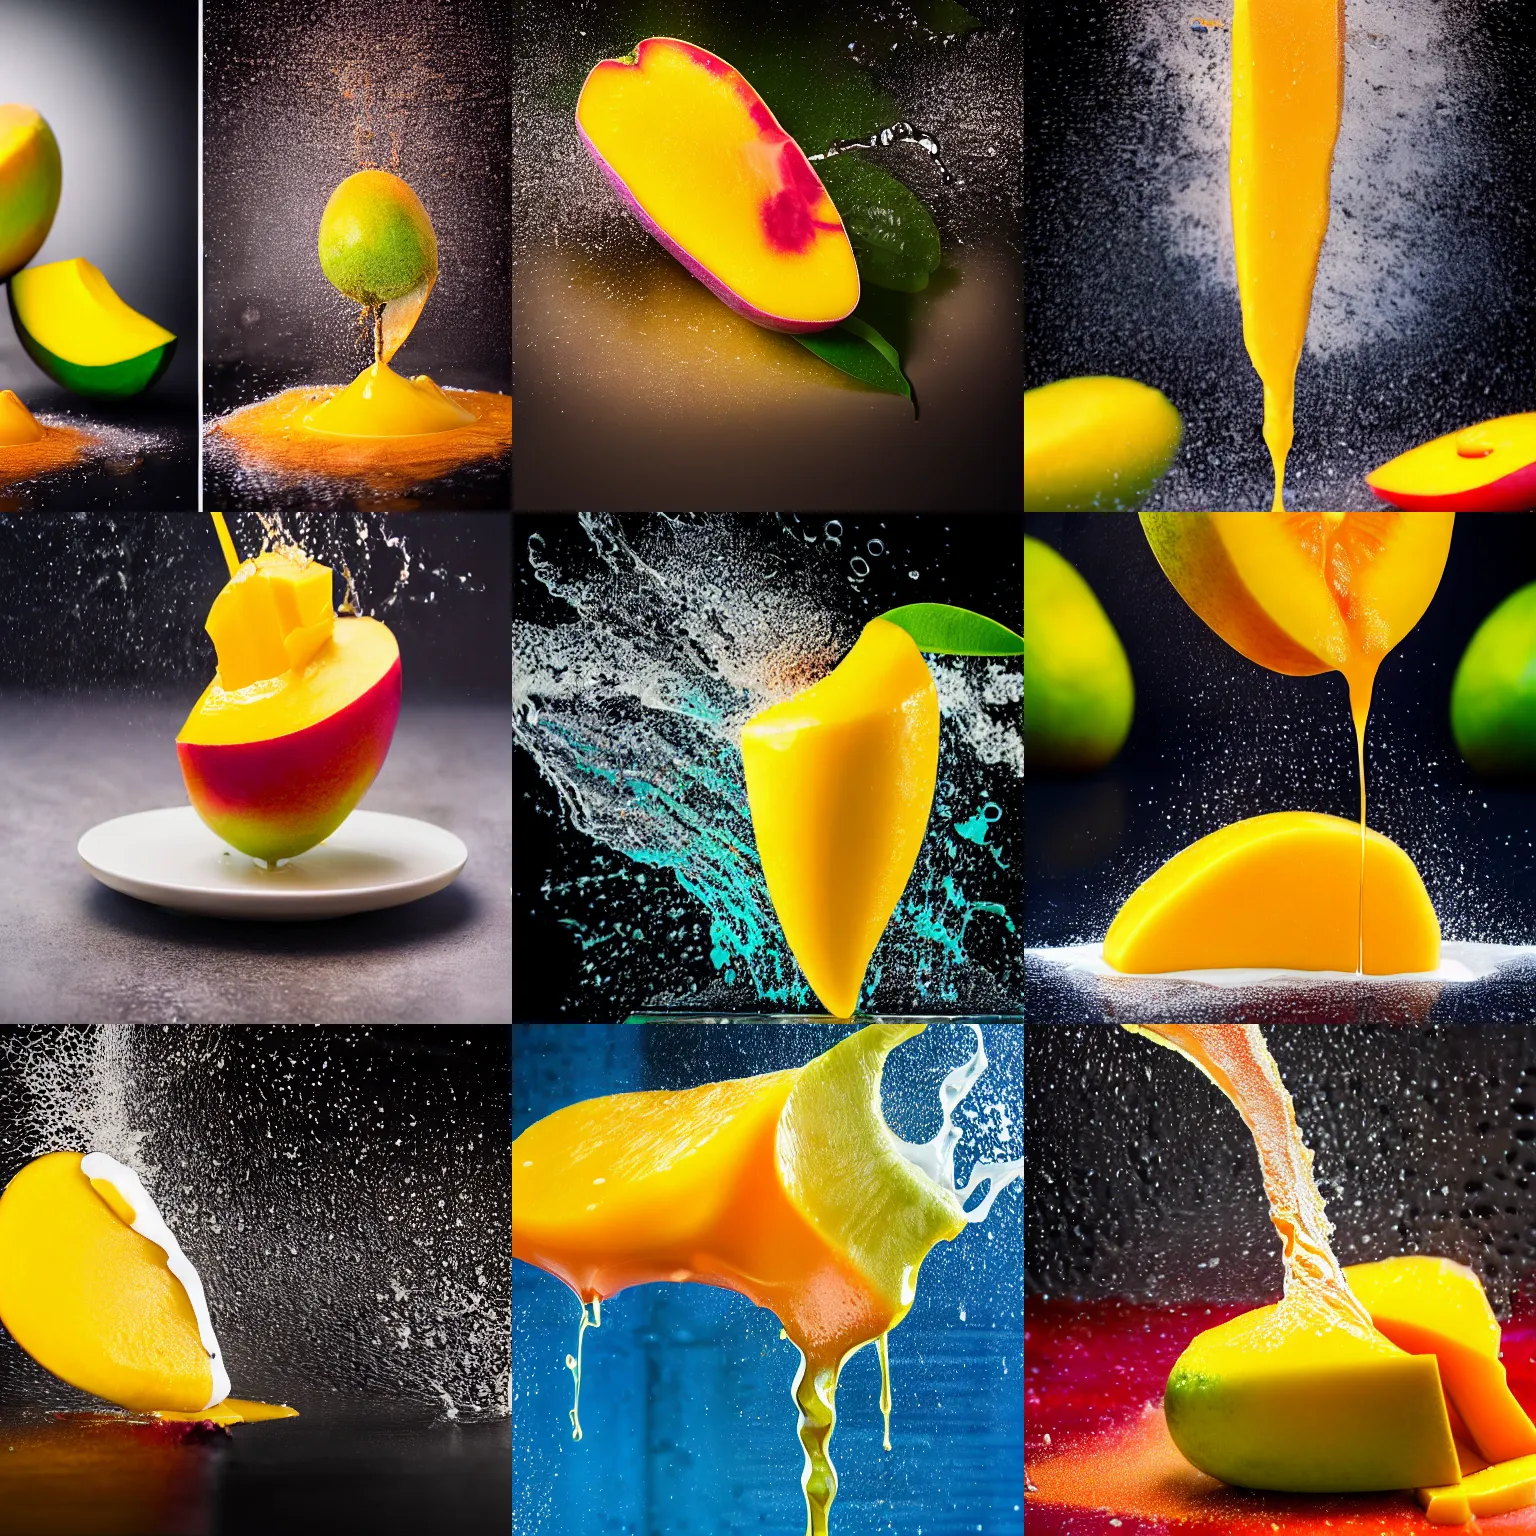 Prompt: a mango split in half with juice splashing out, colorful liquid splash, centered, bokeh, studio lighting, advertisement, high speed photography